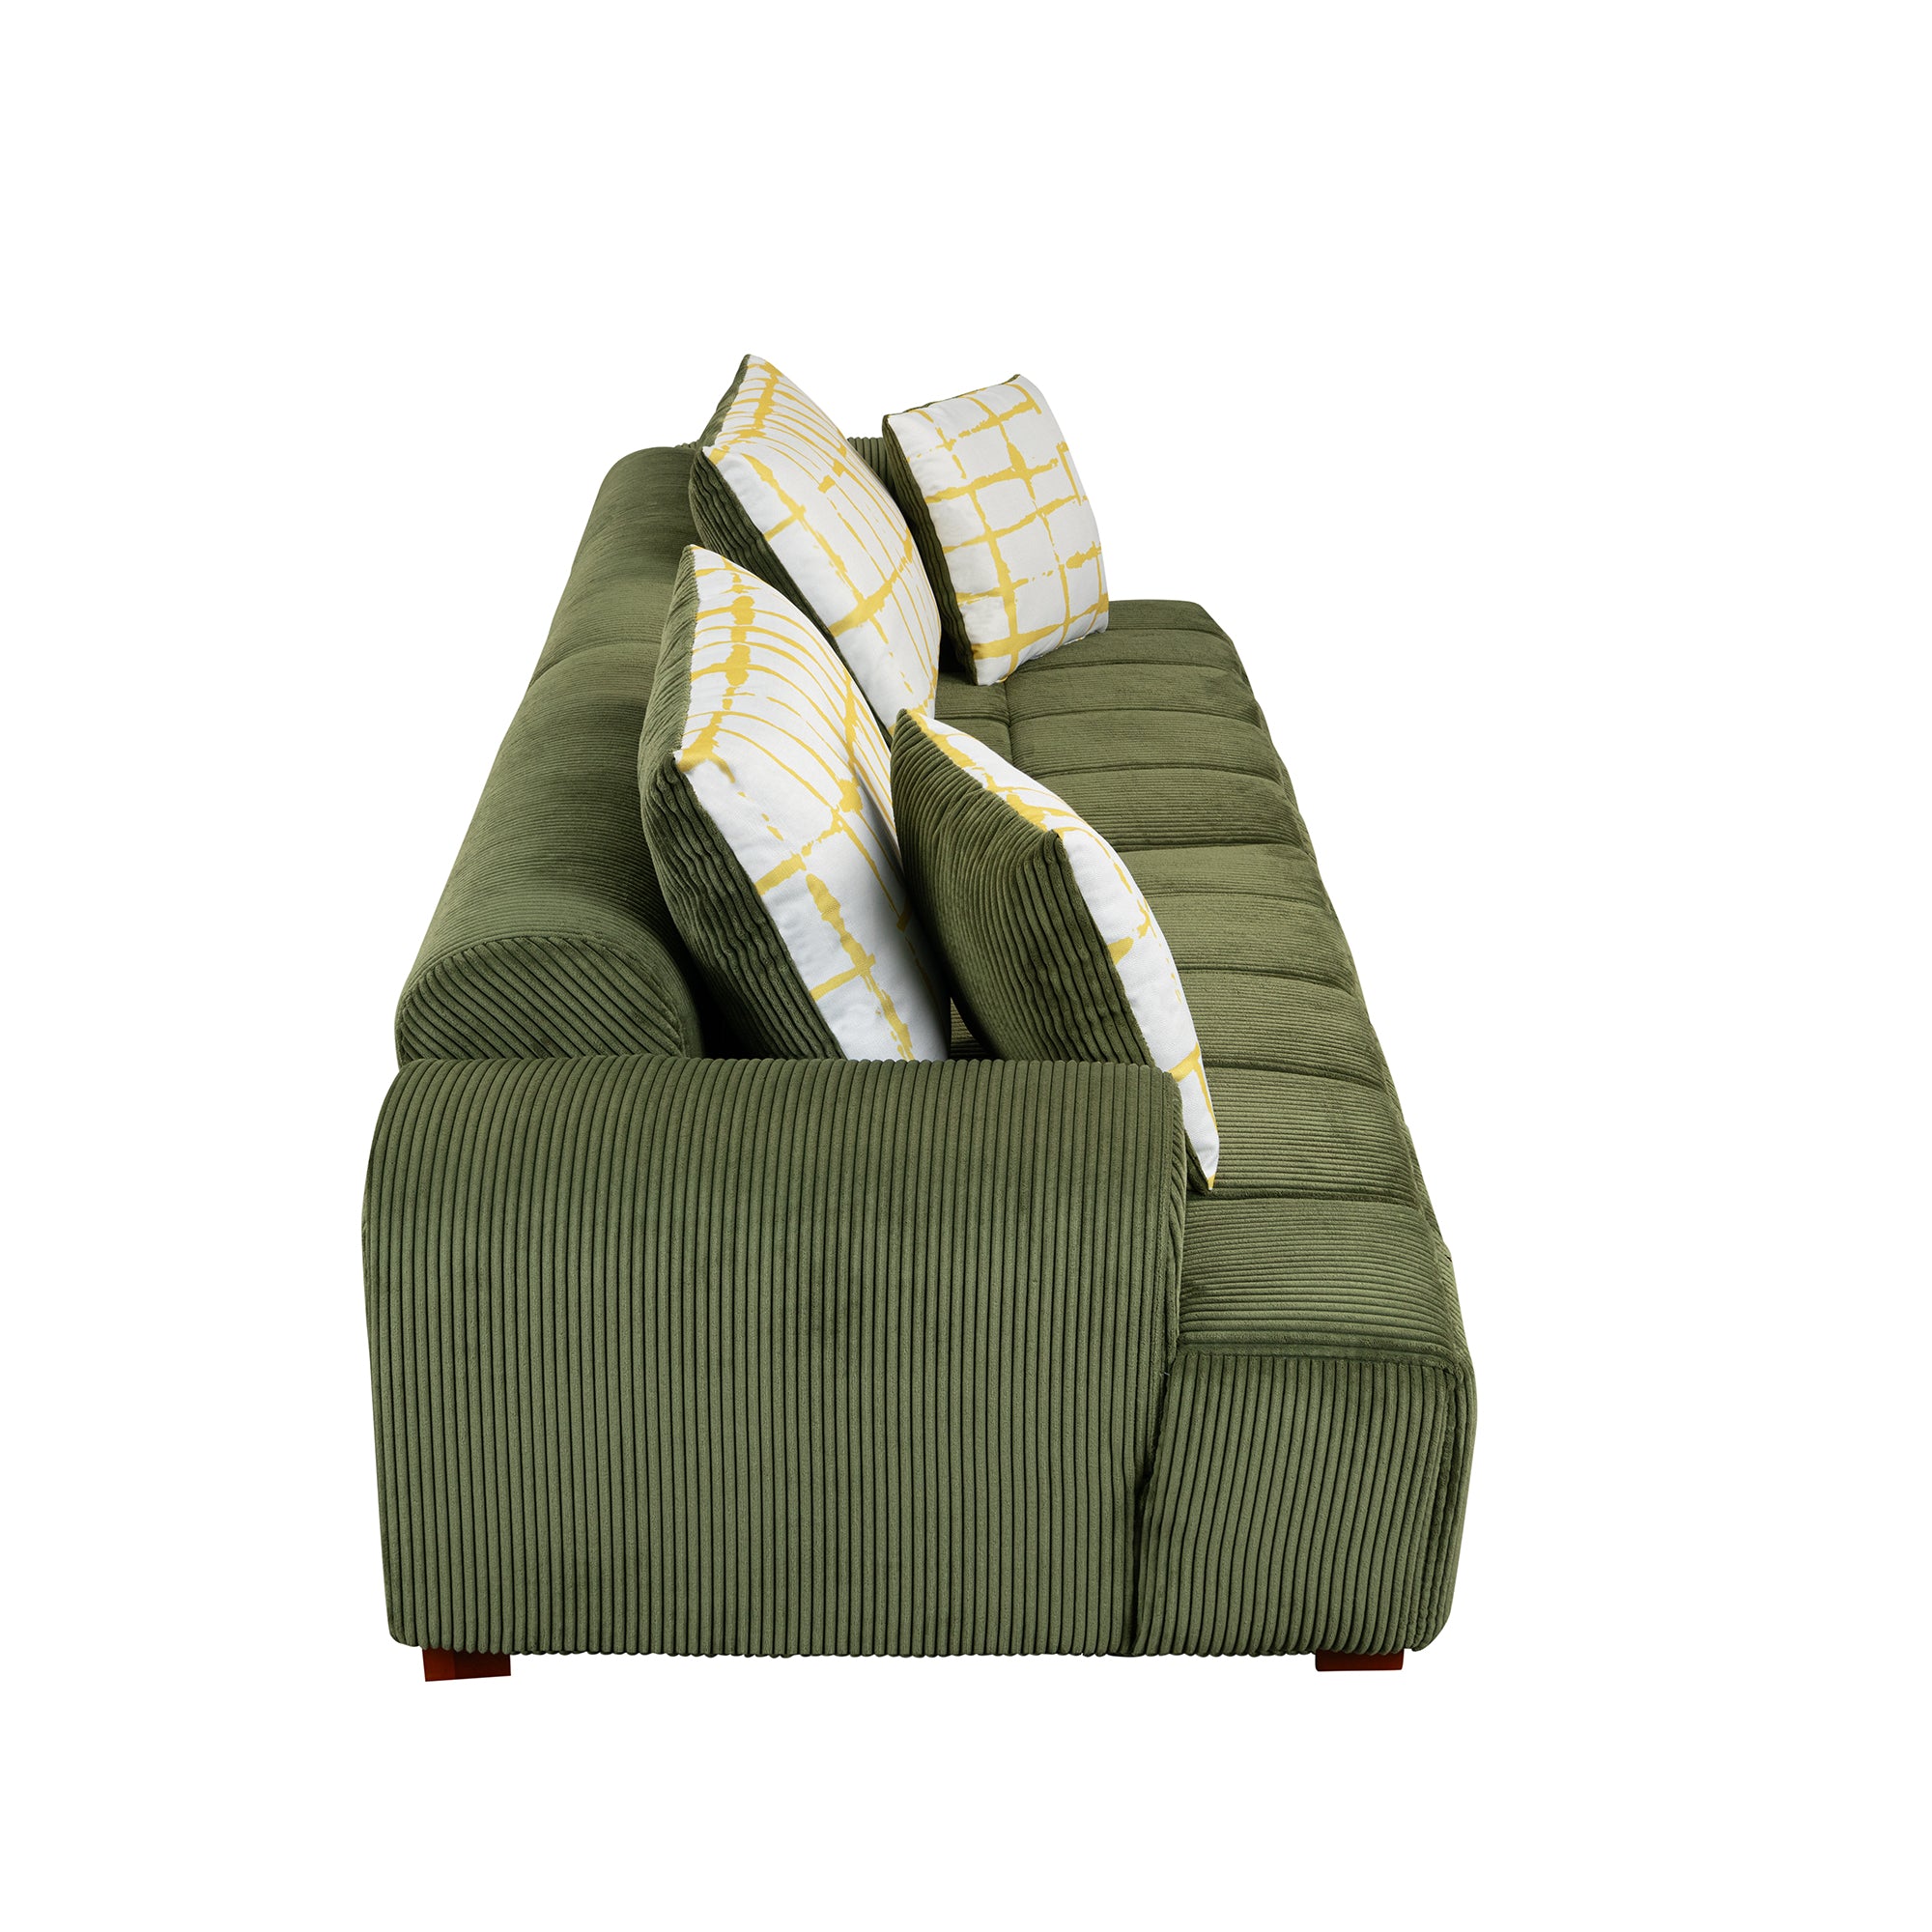 Modern Corduroy Fabric Green Sofa